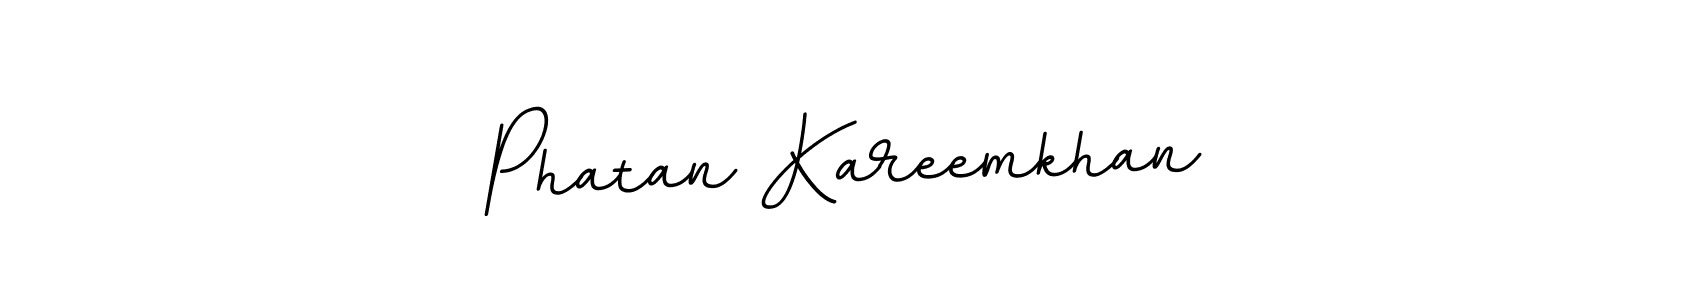 How to Draw Phatan Kareemkhan signature style? BallpointsItalic-DORy9 is a latest design signature styles for name Phatan Kareemkhan. Phatan Kareemkhan signature style 11 images and pictures png